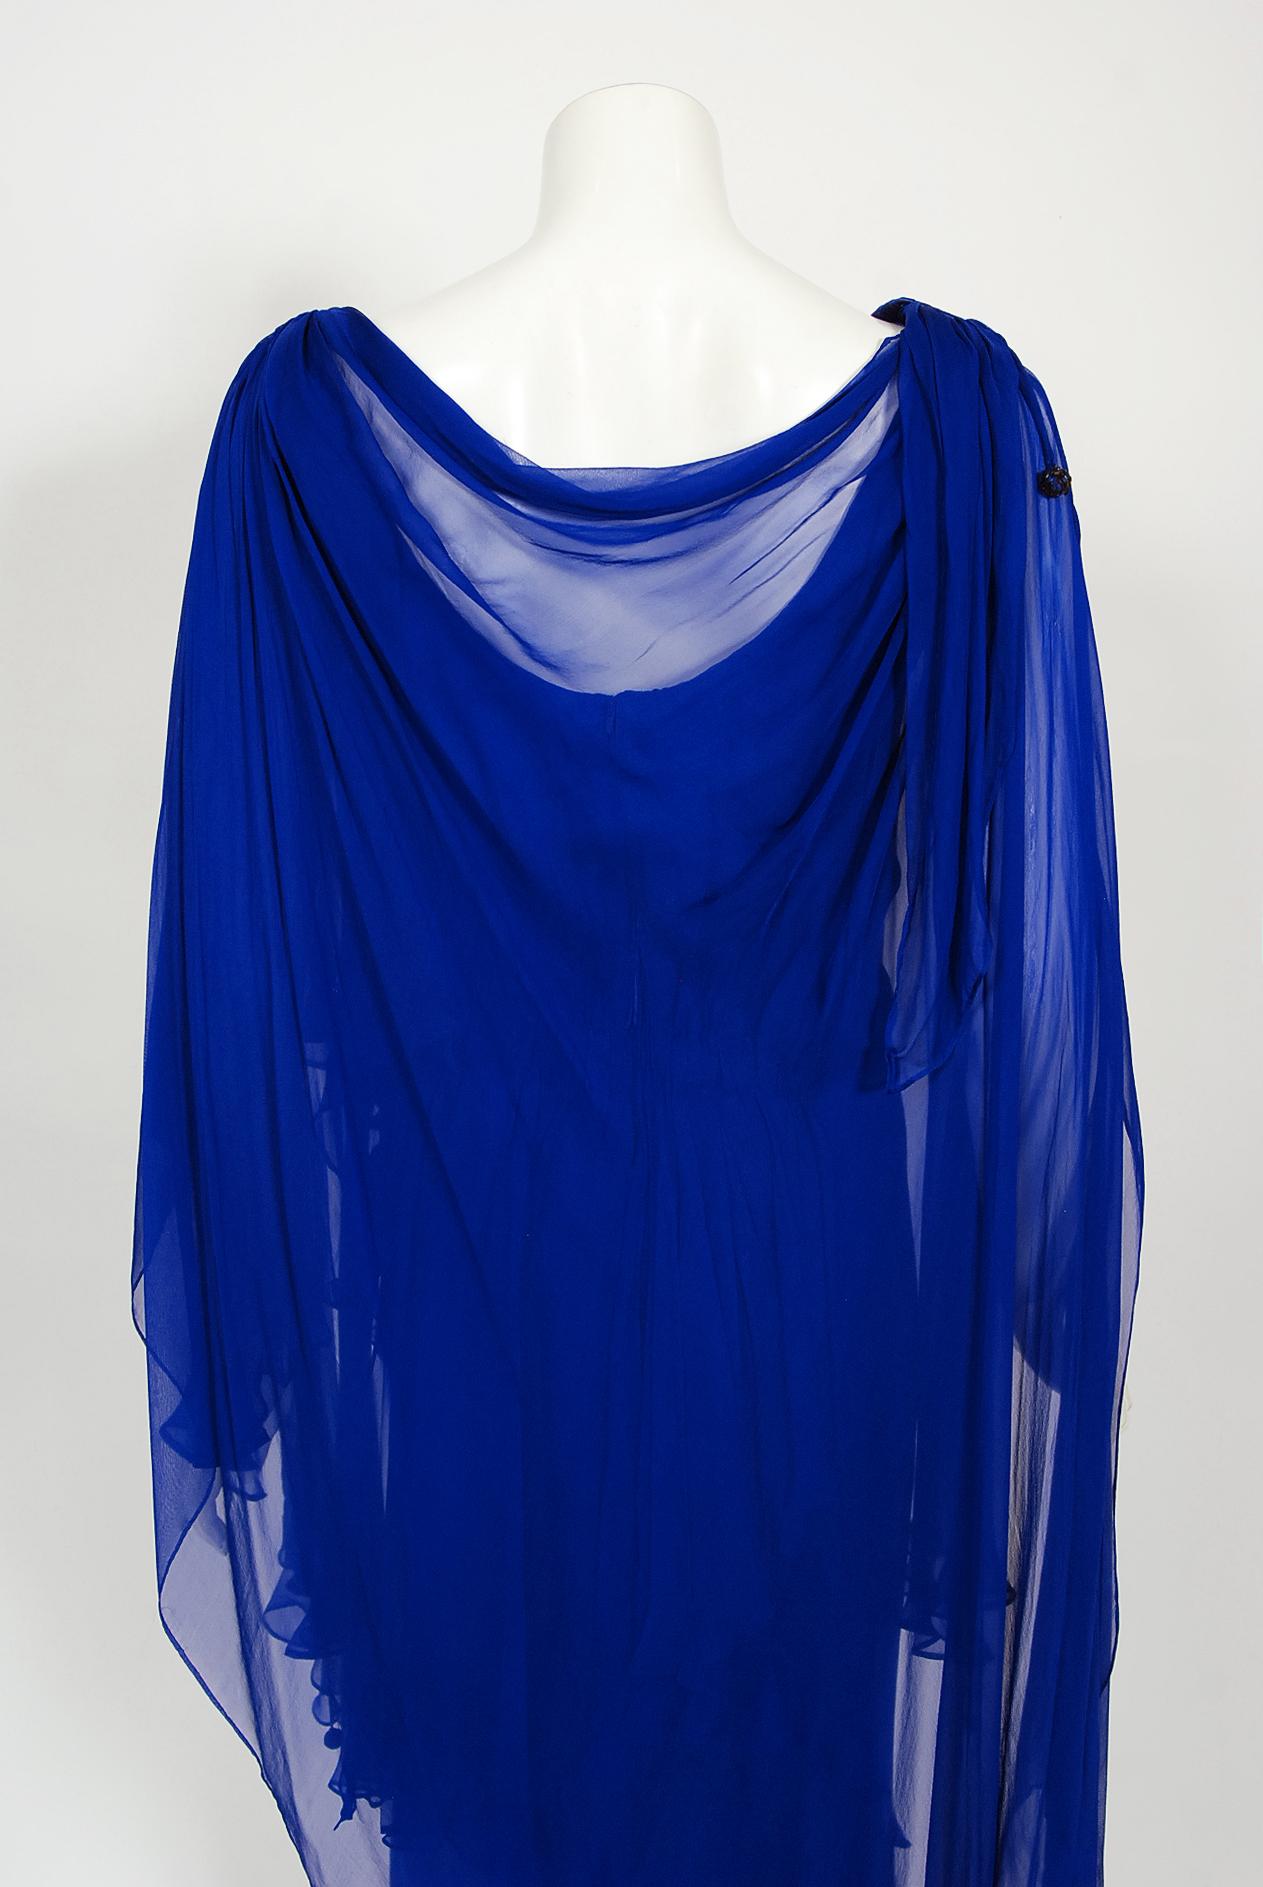 Vintage 1967 Givenchy Haute Couture Cobalt Blue Draped Silk Chiffon Caftan Gown For Sale 9